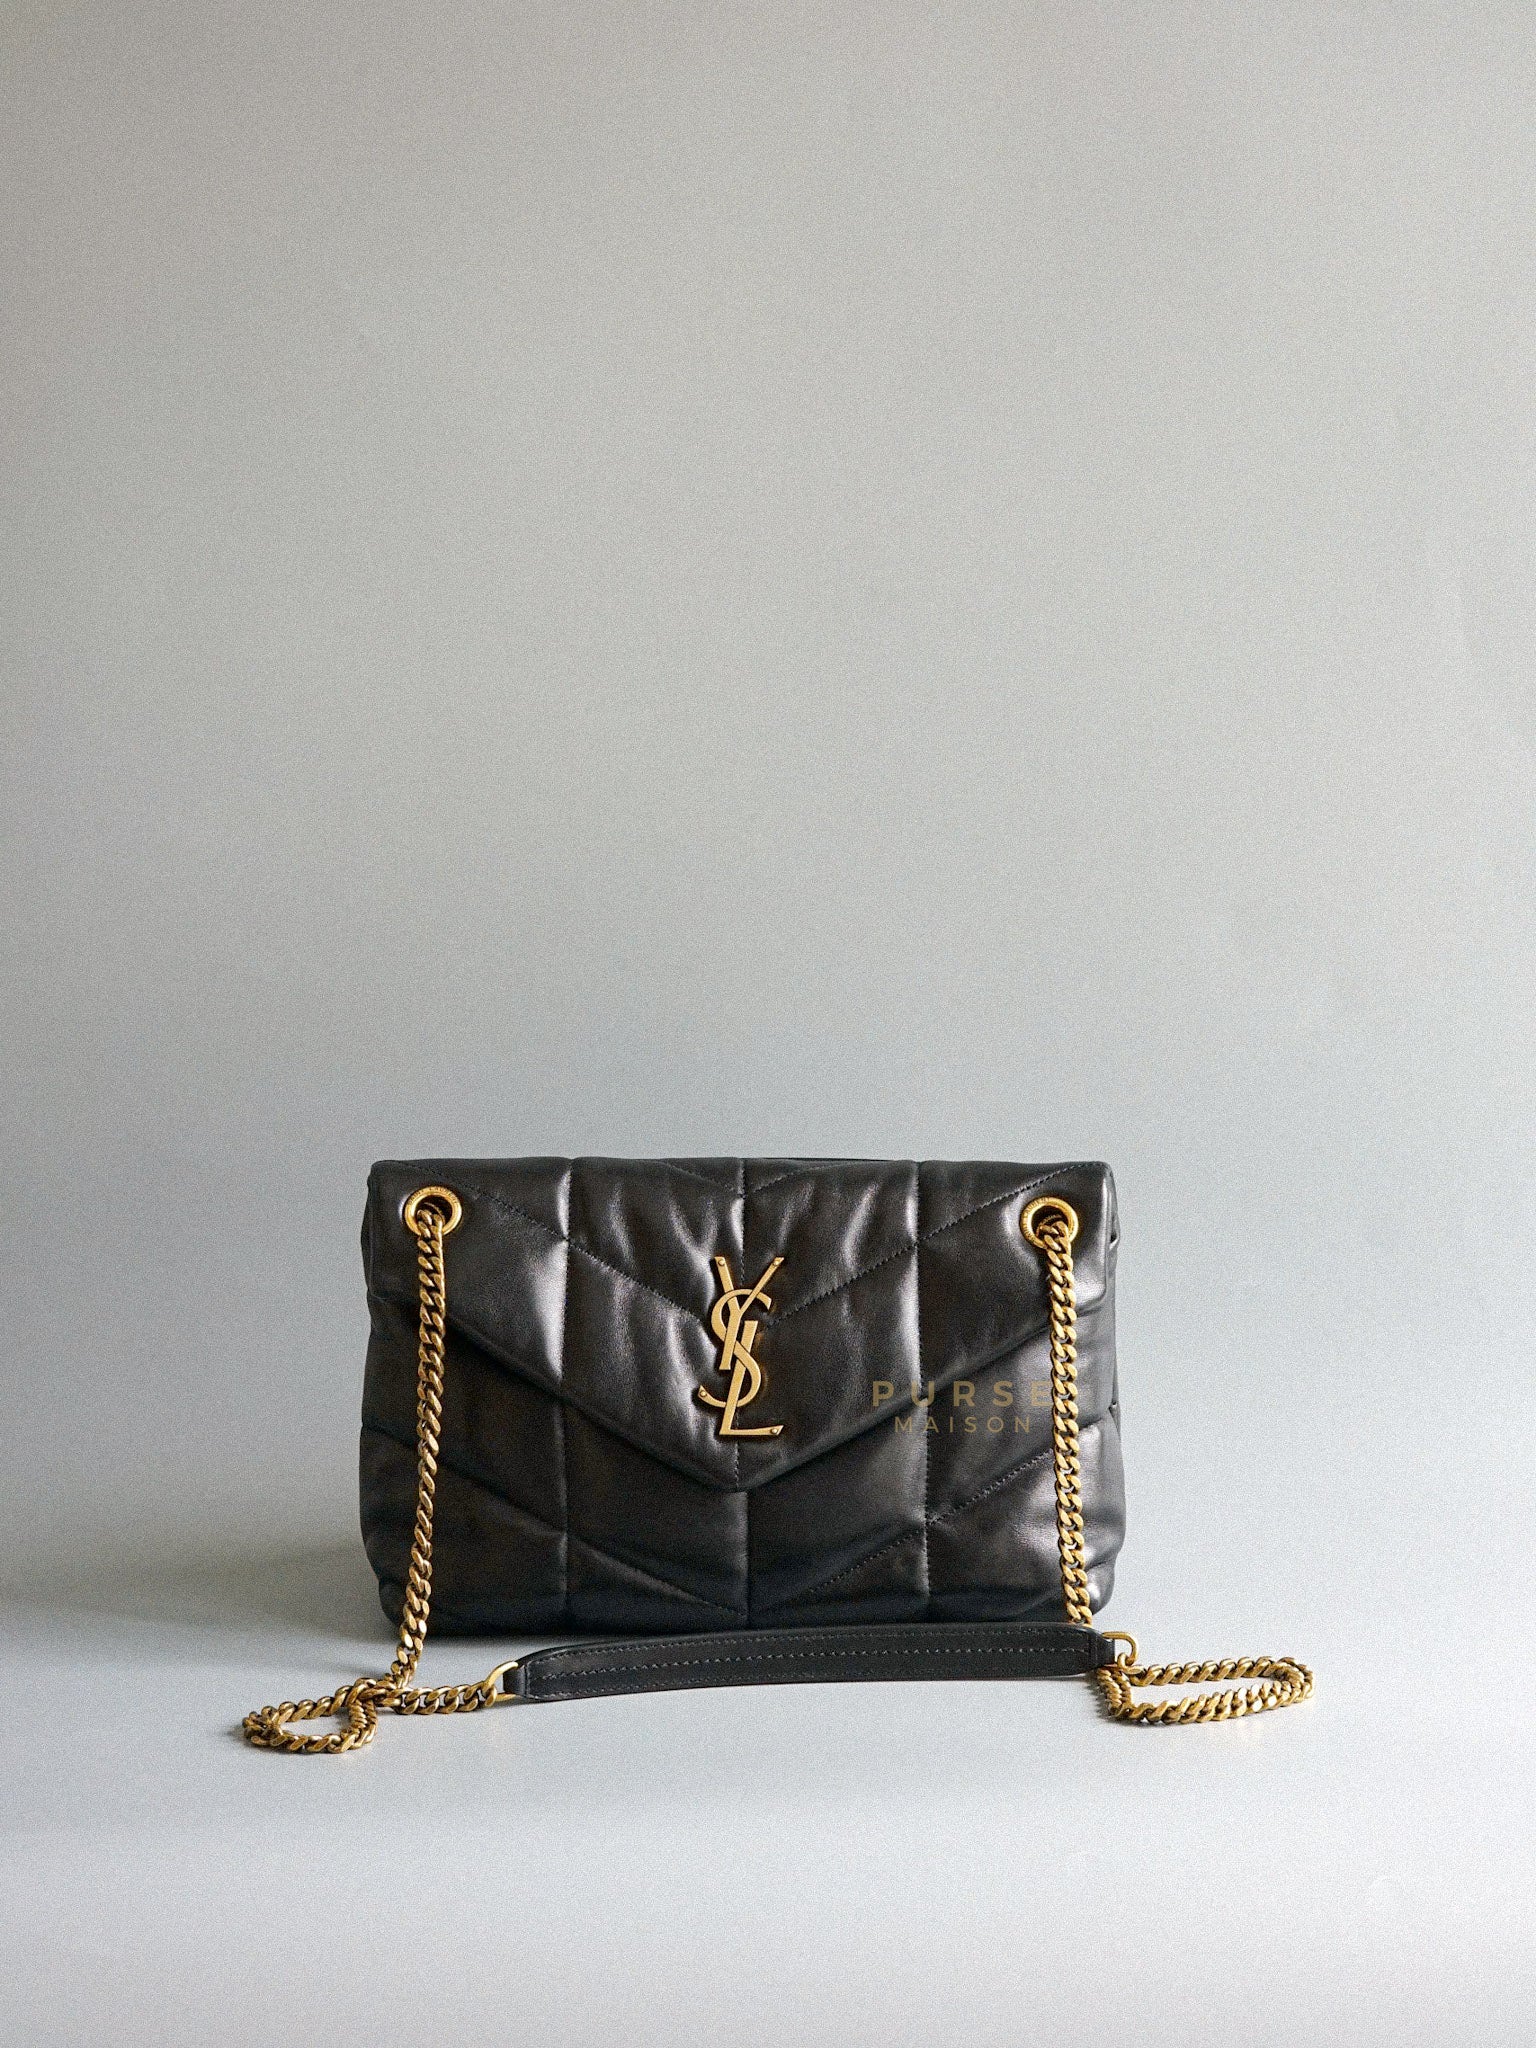 Puffer Small Black Lambskin in Gold Hardware | Purse Maison Luxury Bags Shop